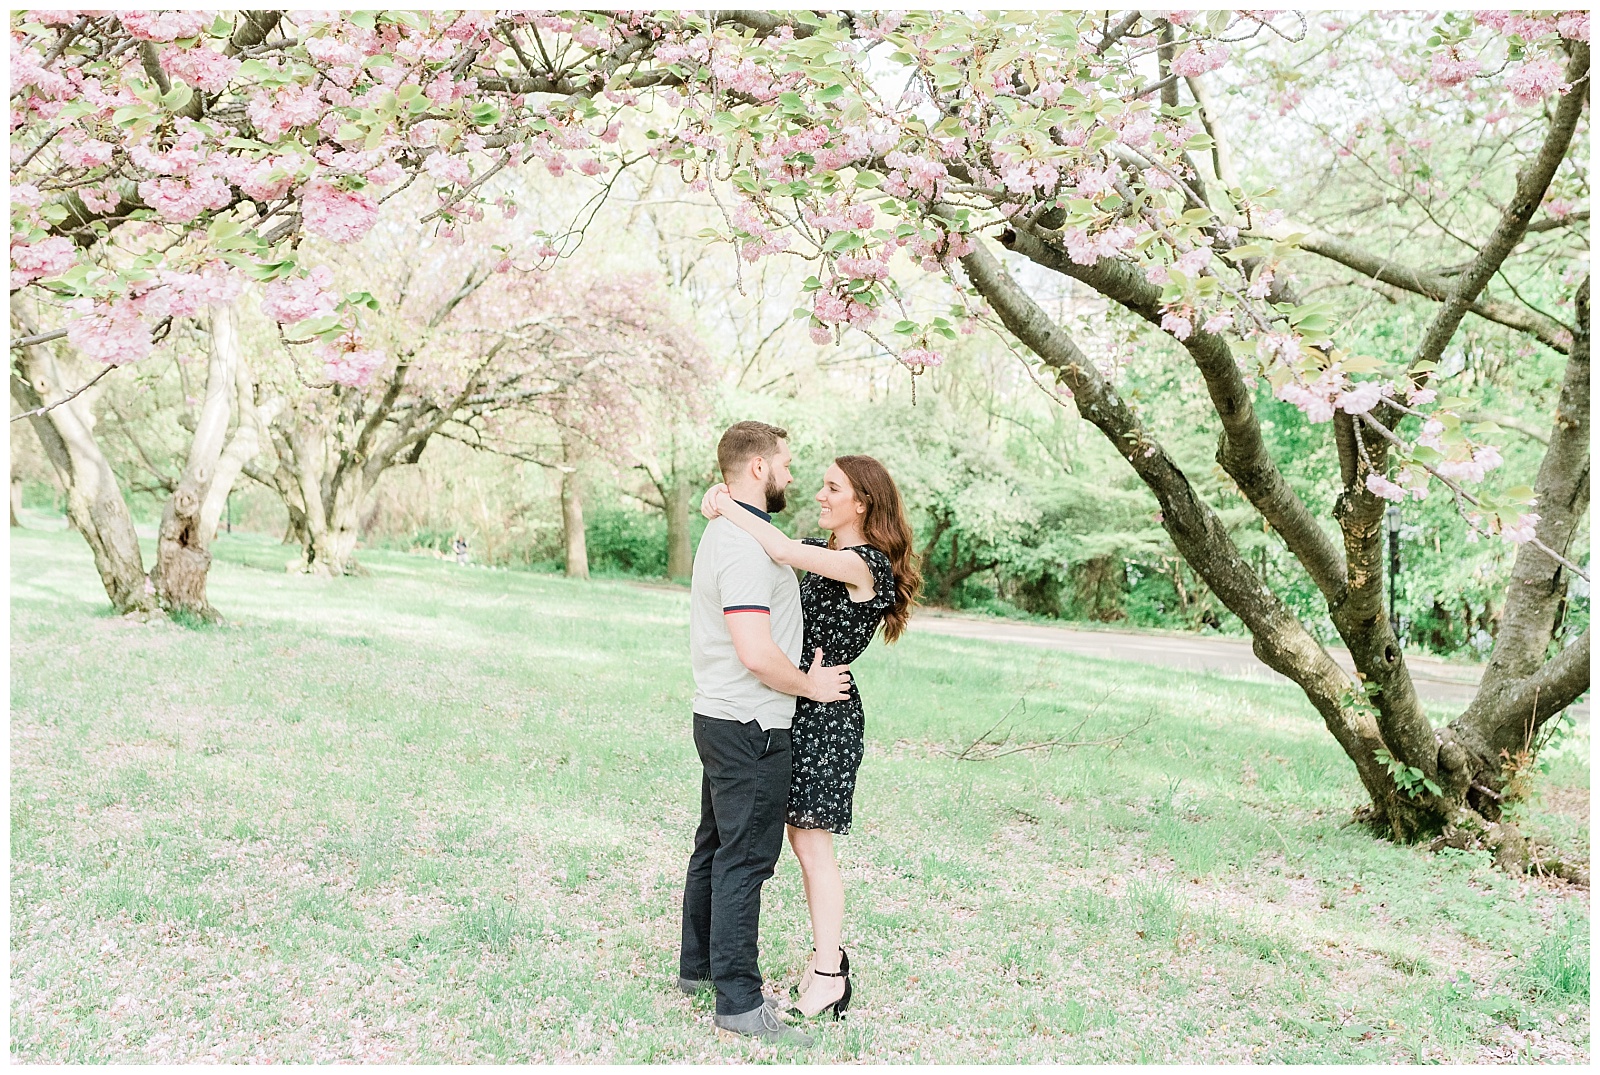 A couple slow dances beneath a cherry blossom tree.